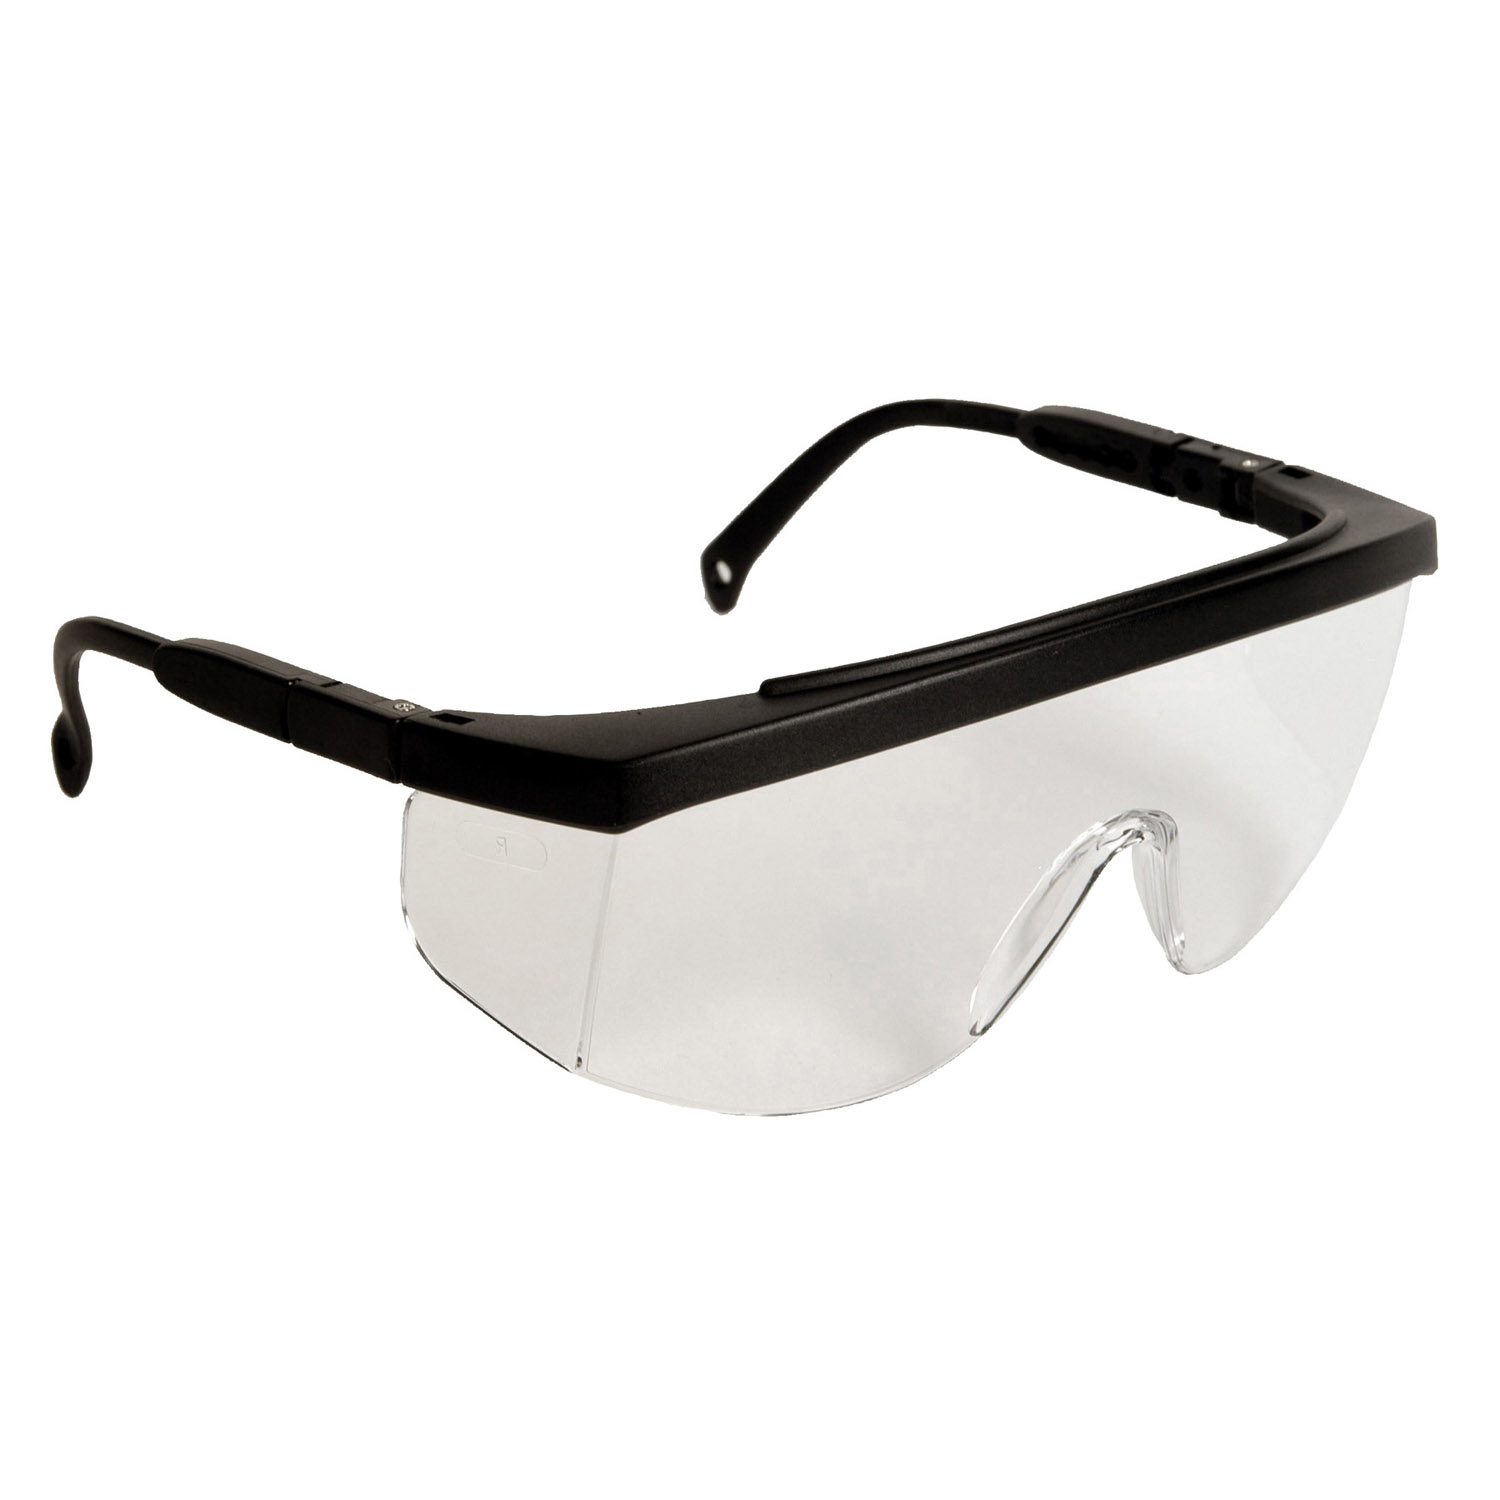 G4™ Safety Eyewear - Black Frame - Clear Lens - Clear Lens